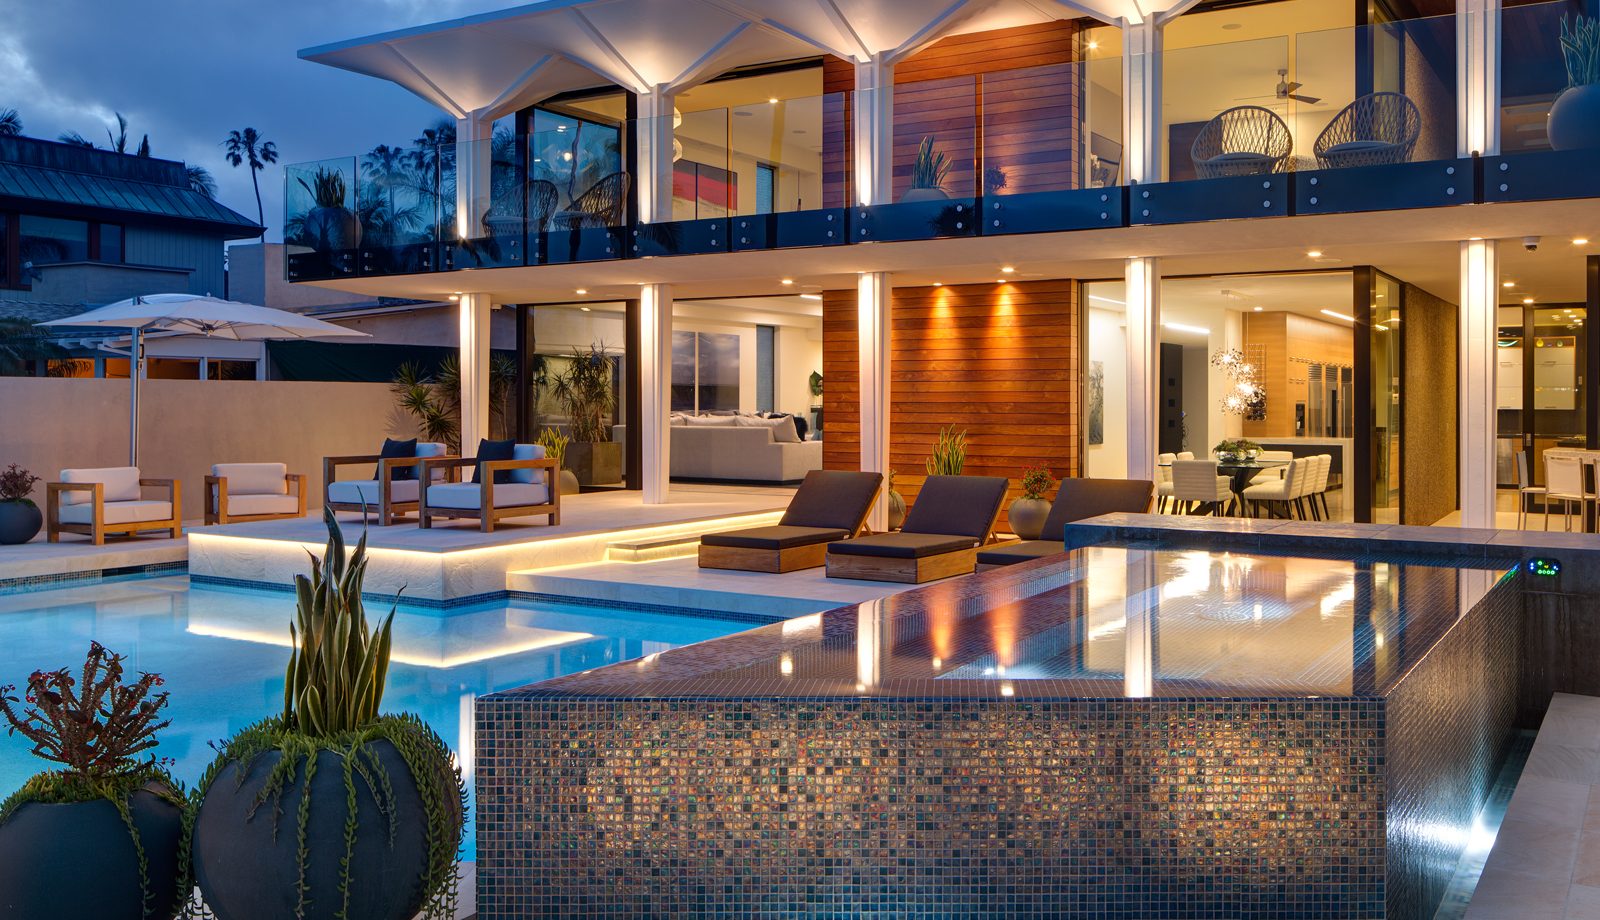 Pool contractor creates luxury pool designs.